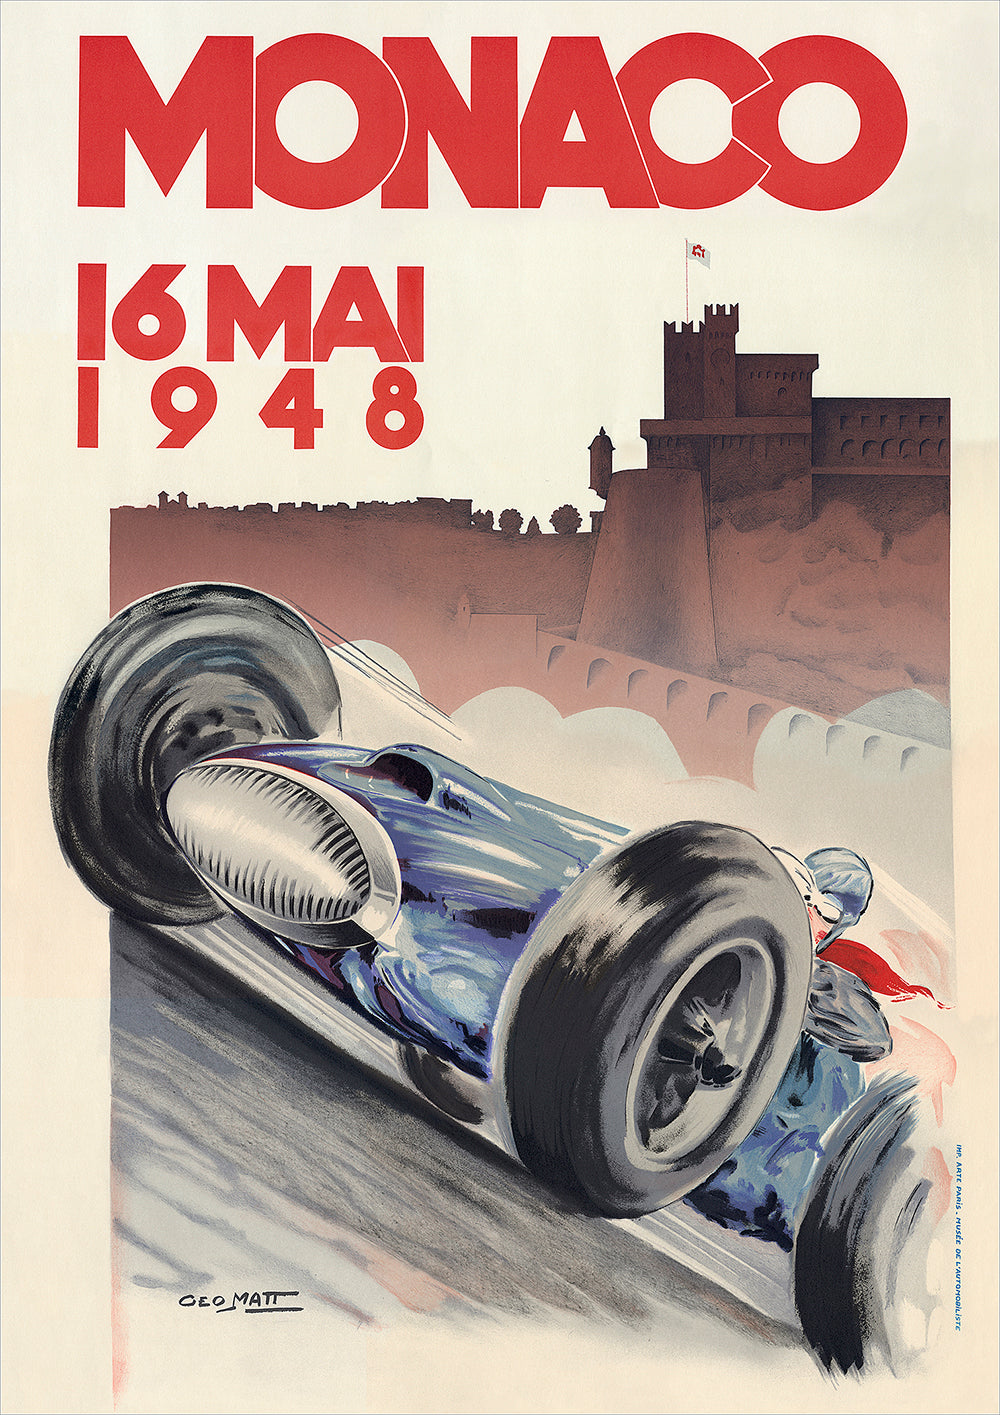 1948 Monaco Prix Poster